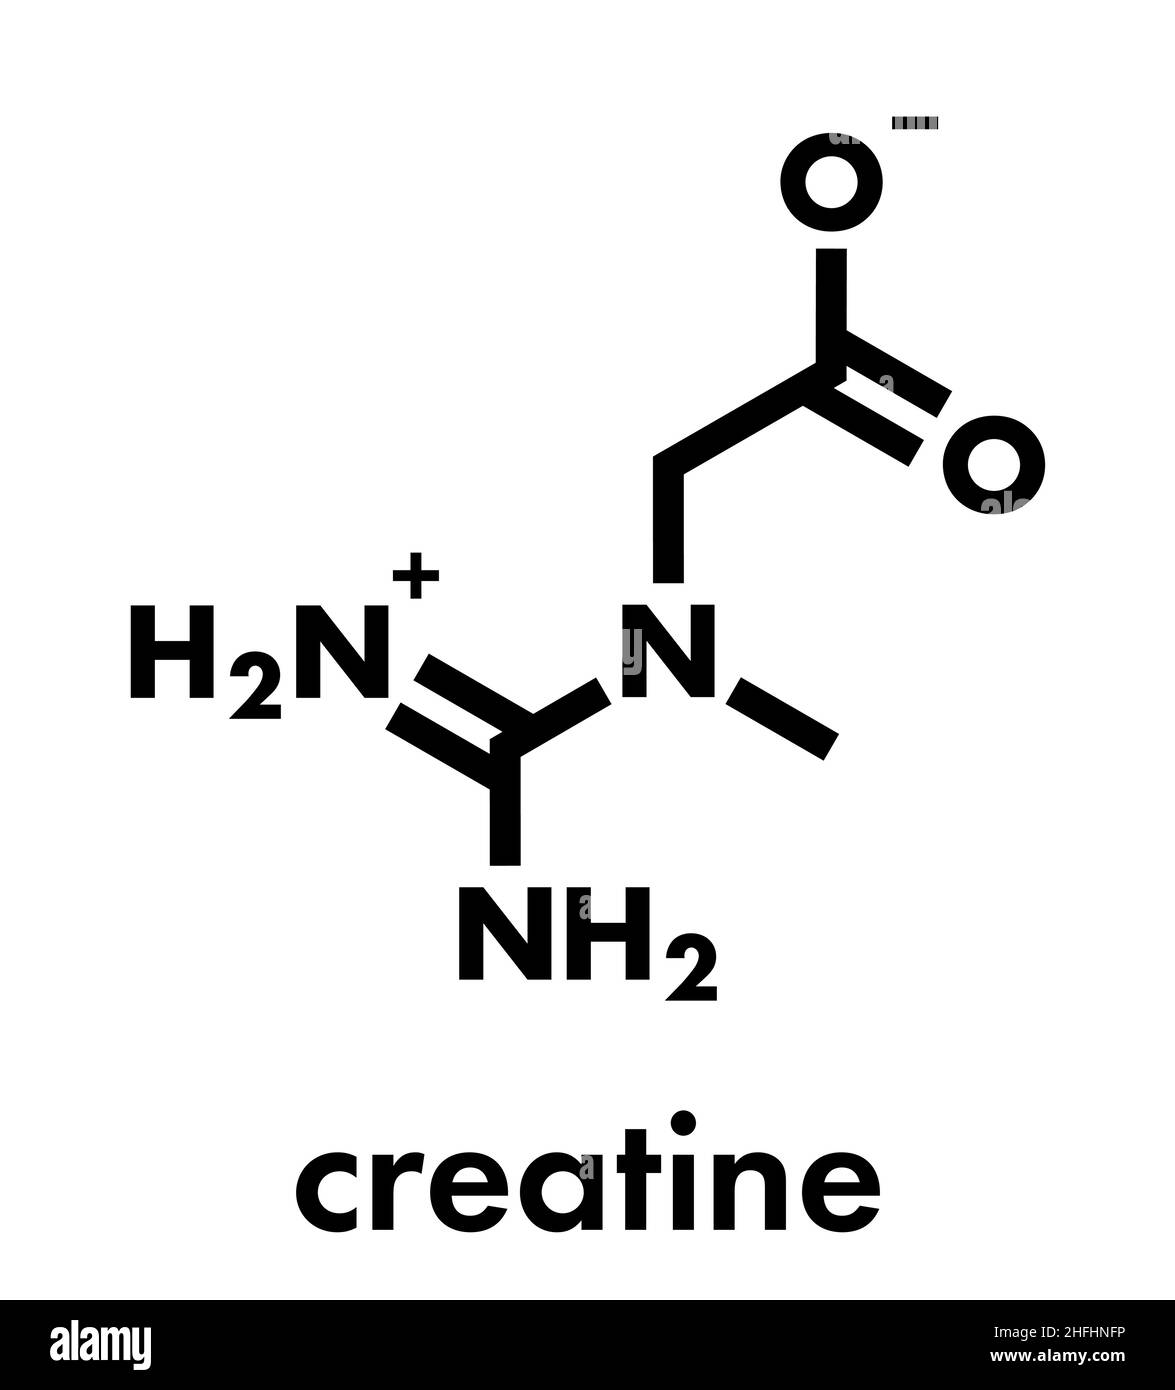 Kreatin-Molekül. Wird oft in Nahrungsergänzungsmitteln verwendet. Skelettformel. Stock Vektor